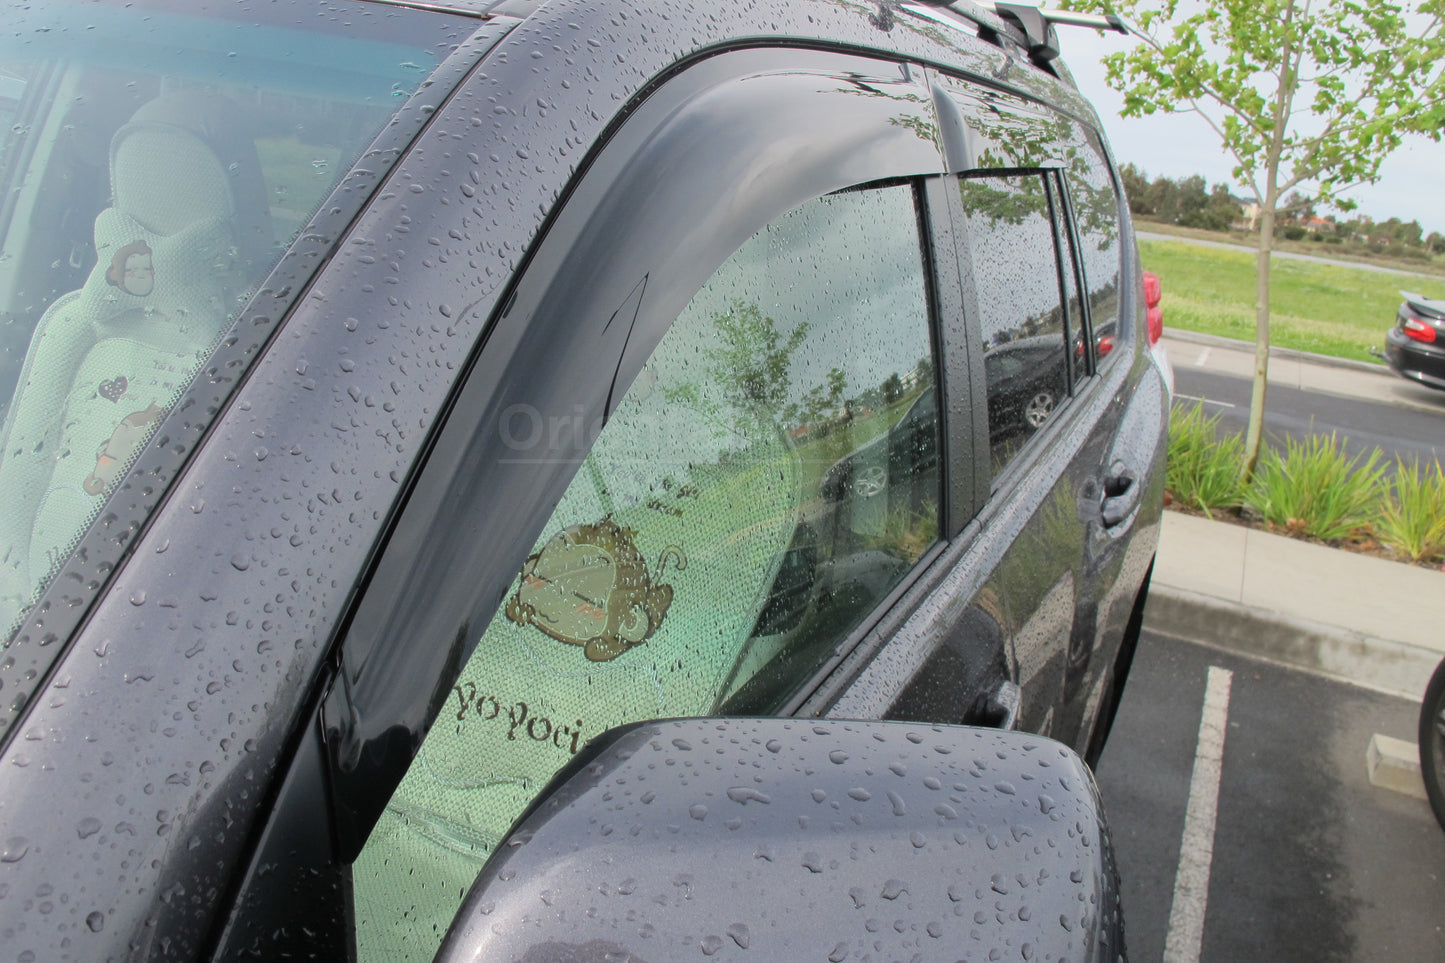 Premium Weathershields Weather Shields Window Visor For Toyota Land Cruiser Prado 150 2009+